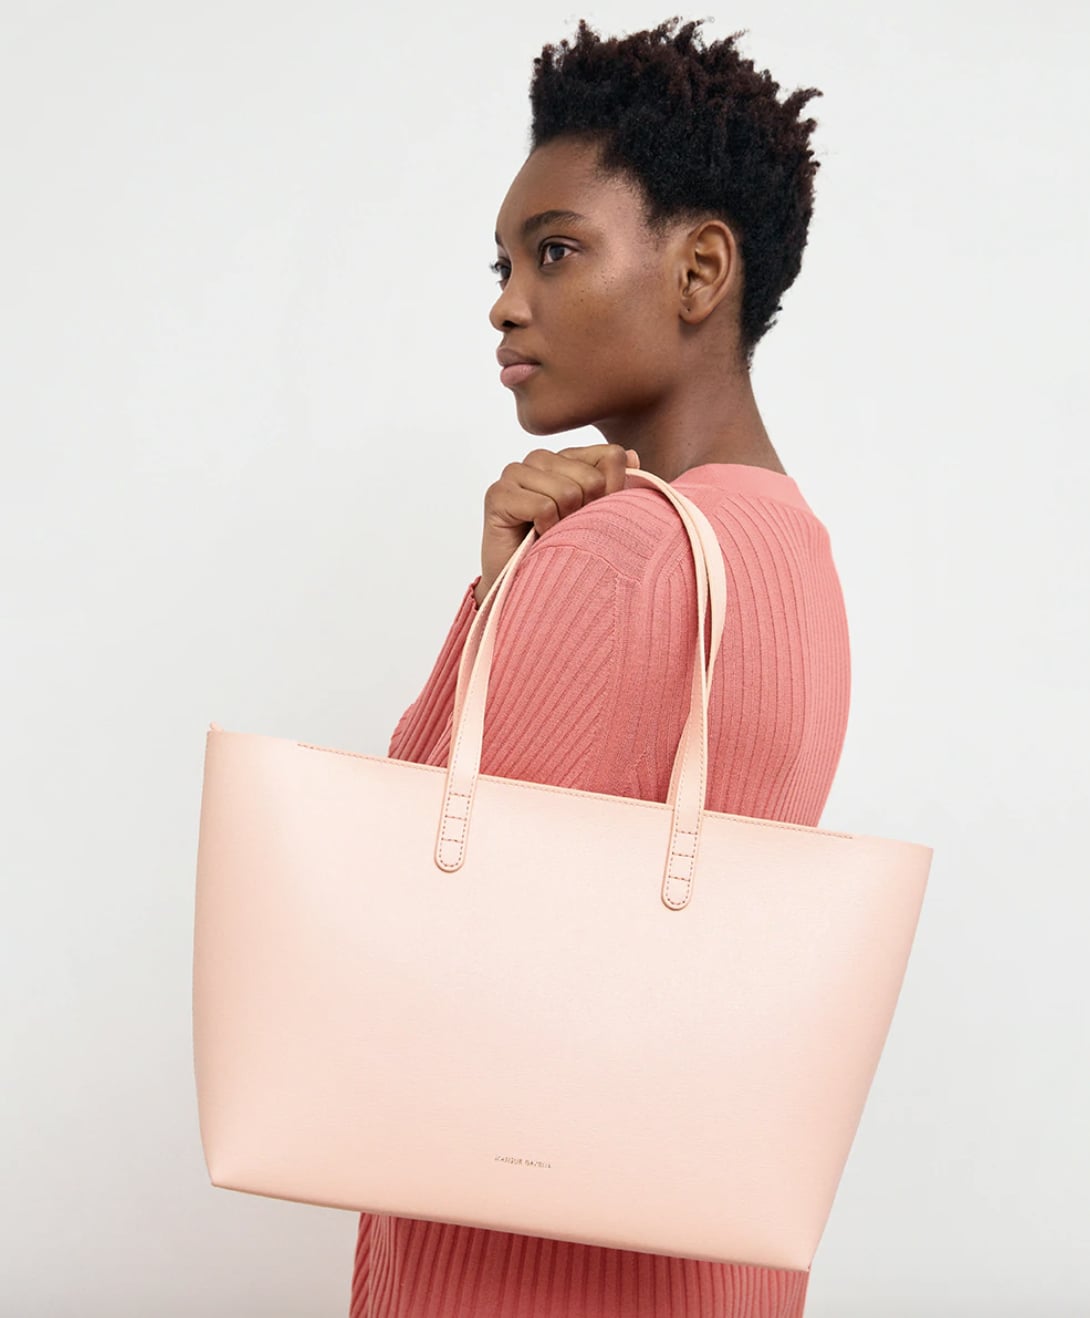 Ladies Women's REAL LEATHER Fashion Quality Bags Handbags Tote Satchel Bag Chic